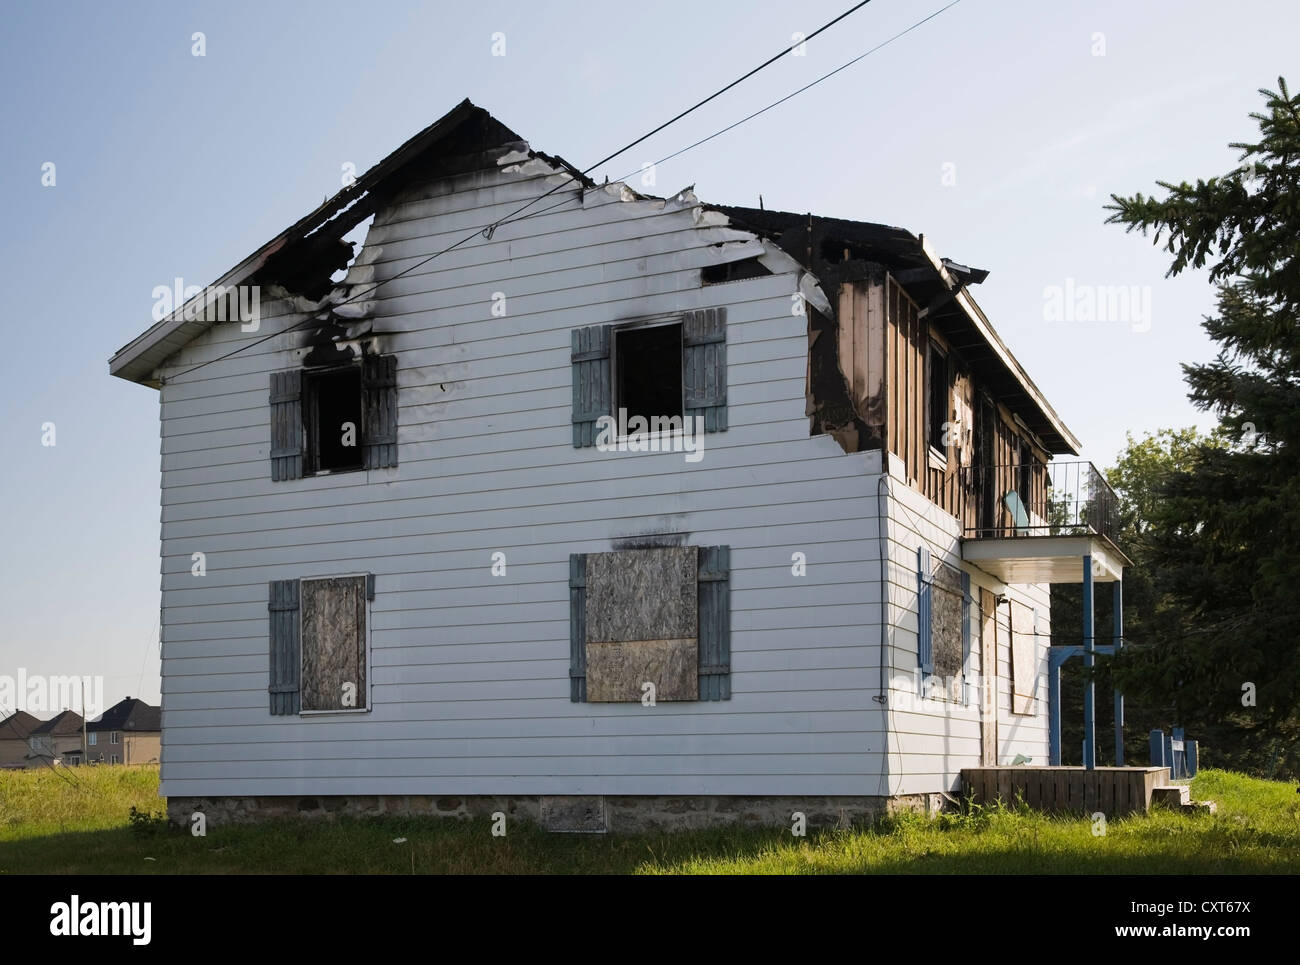 Accueil résidentiels endommagés par le feu, Québec, Canada Banque D'Images